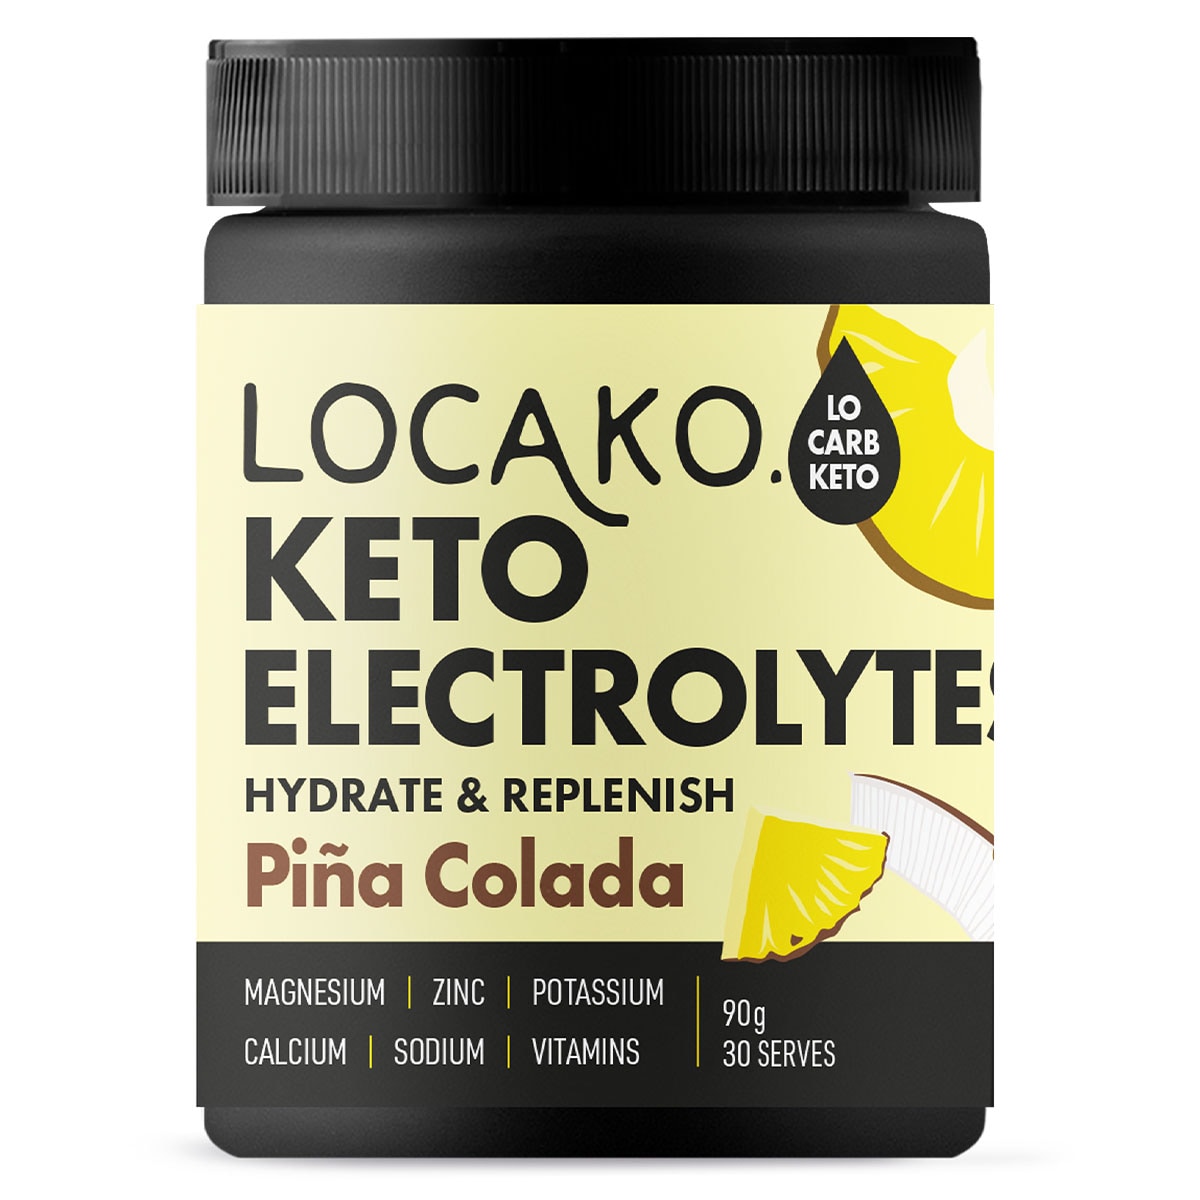 Locako Keto Electrolytes - Pina Colada 90g